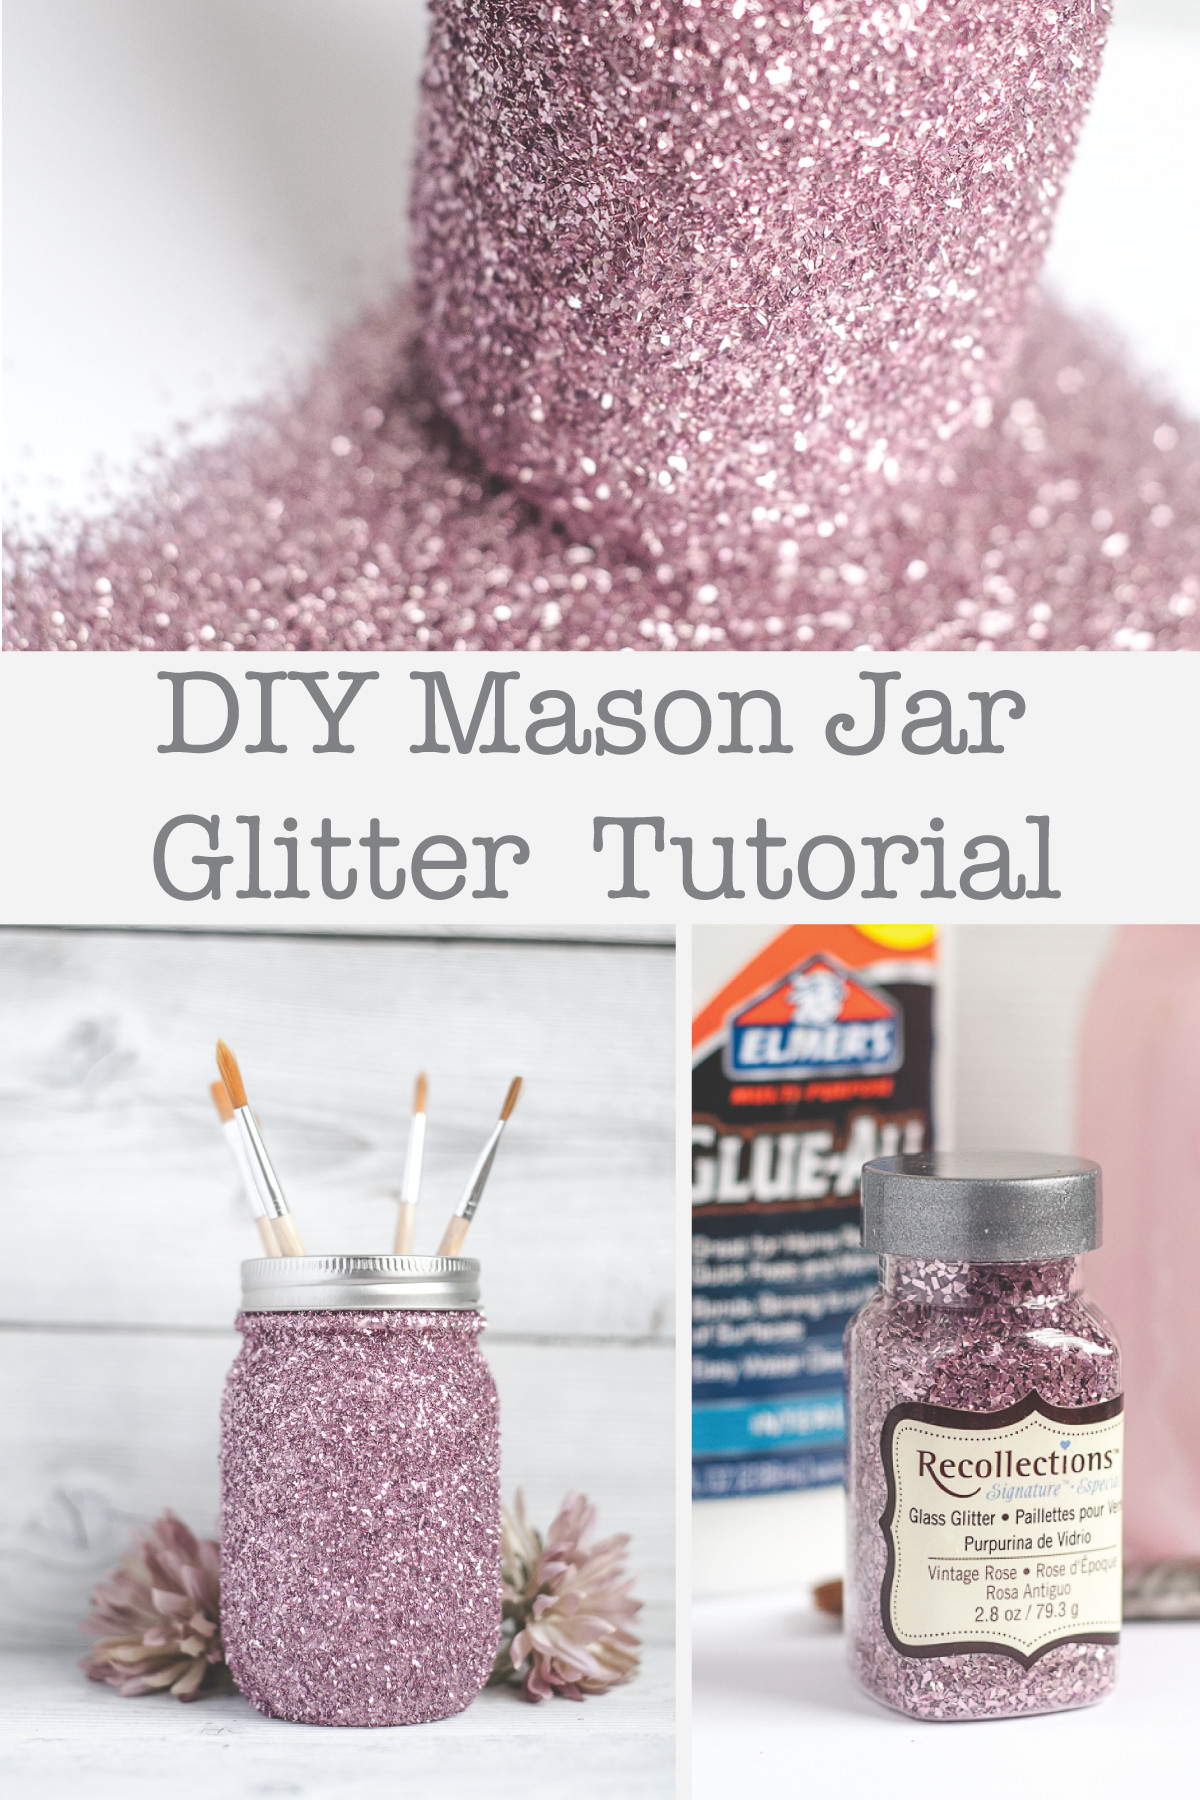 Best ideas about Mason Jar DIY
. Save or Pin DIY Glitter Mason Jar Tutorial KA Styles Design & DIY Now.